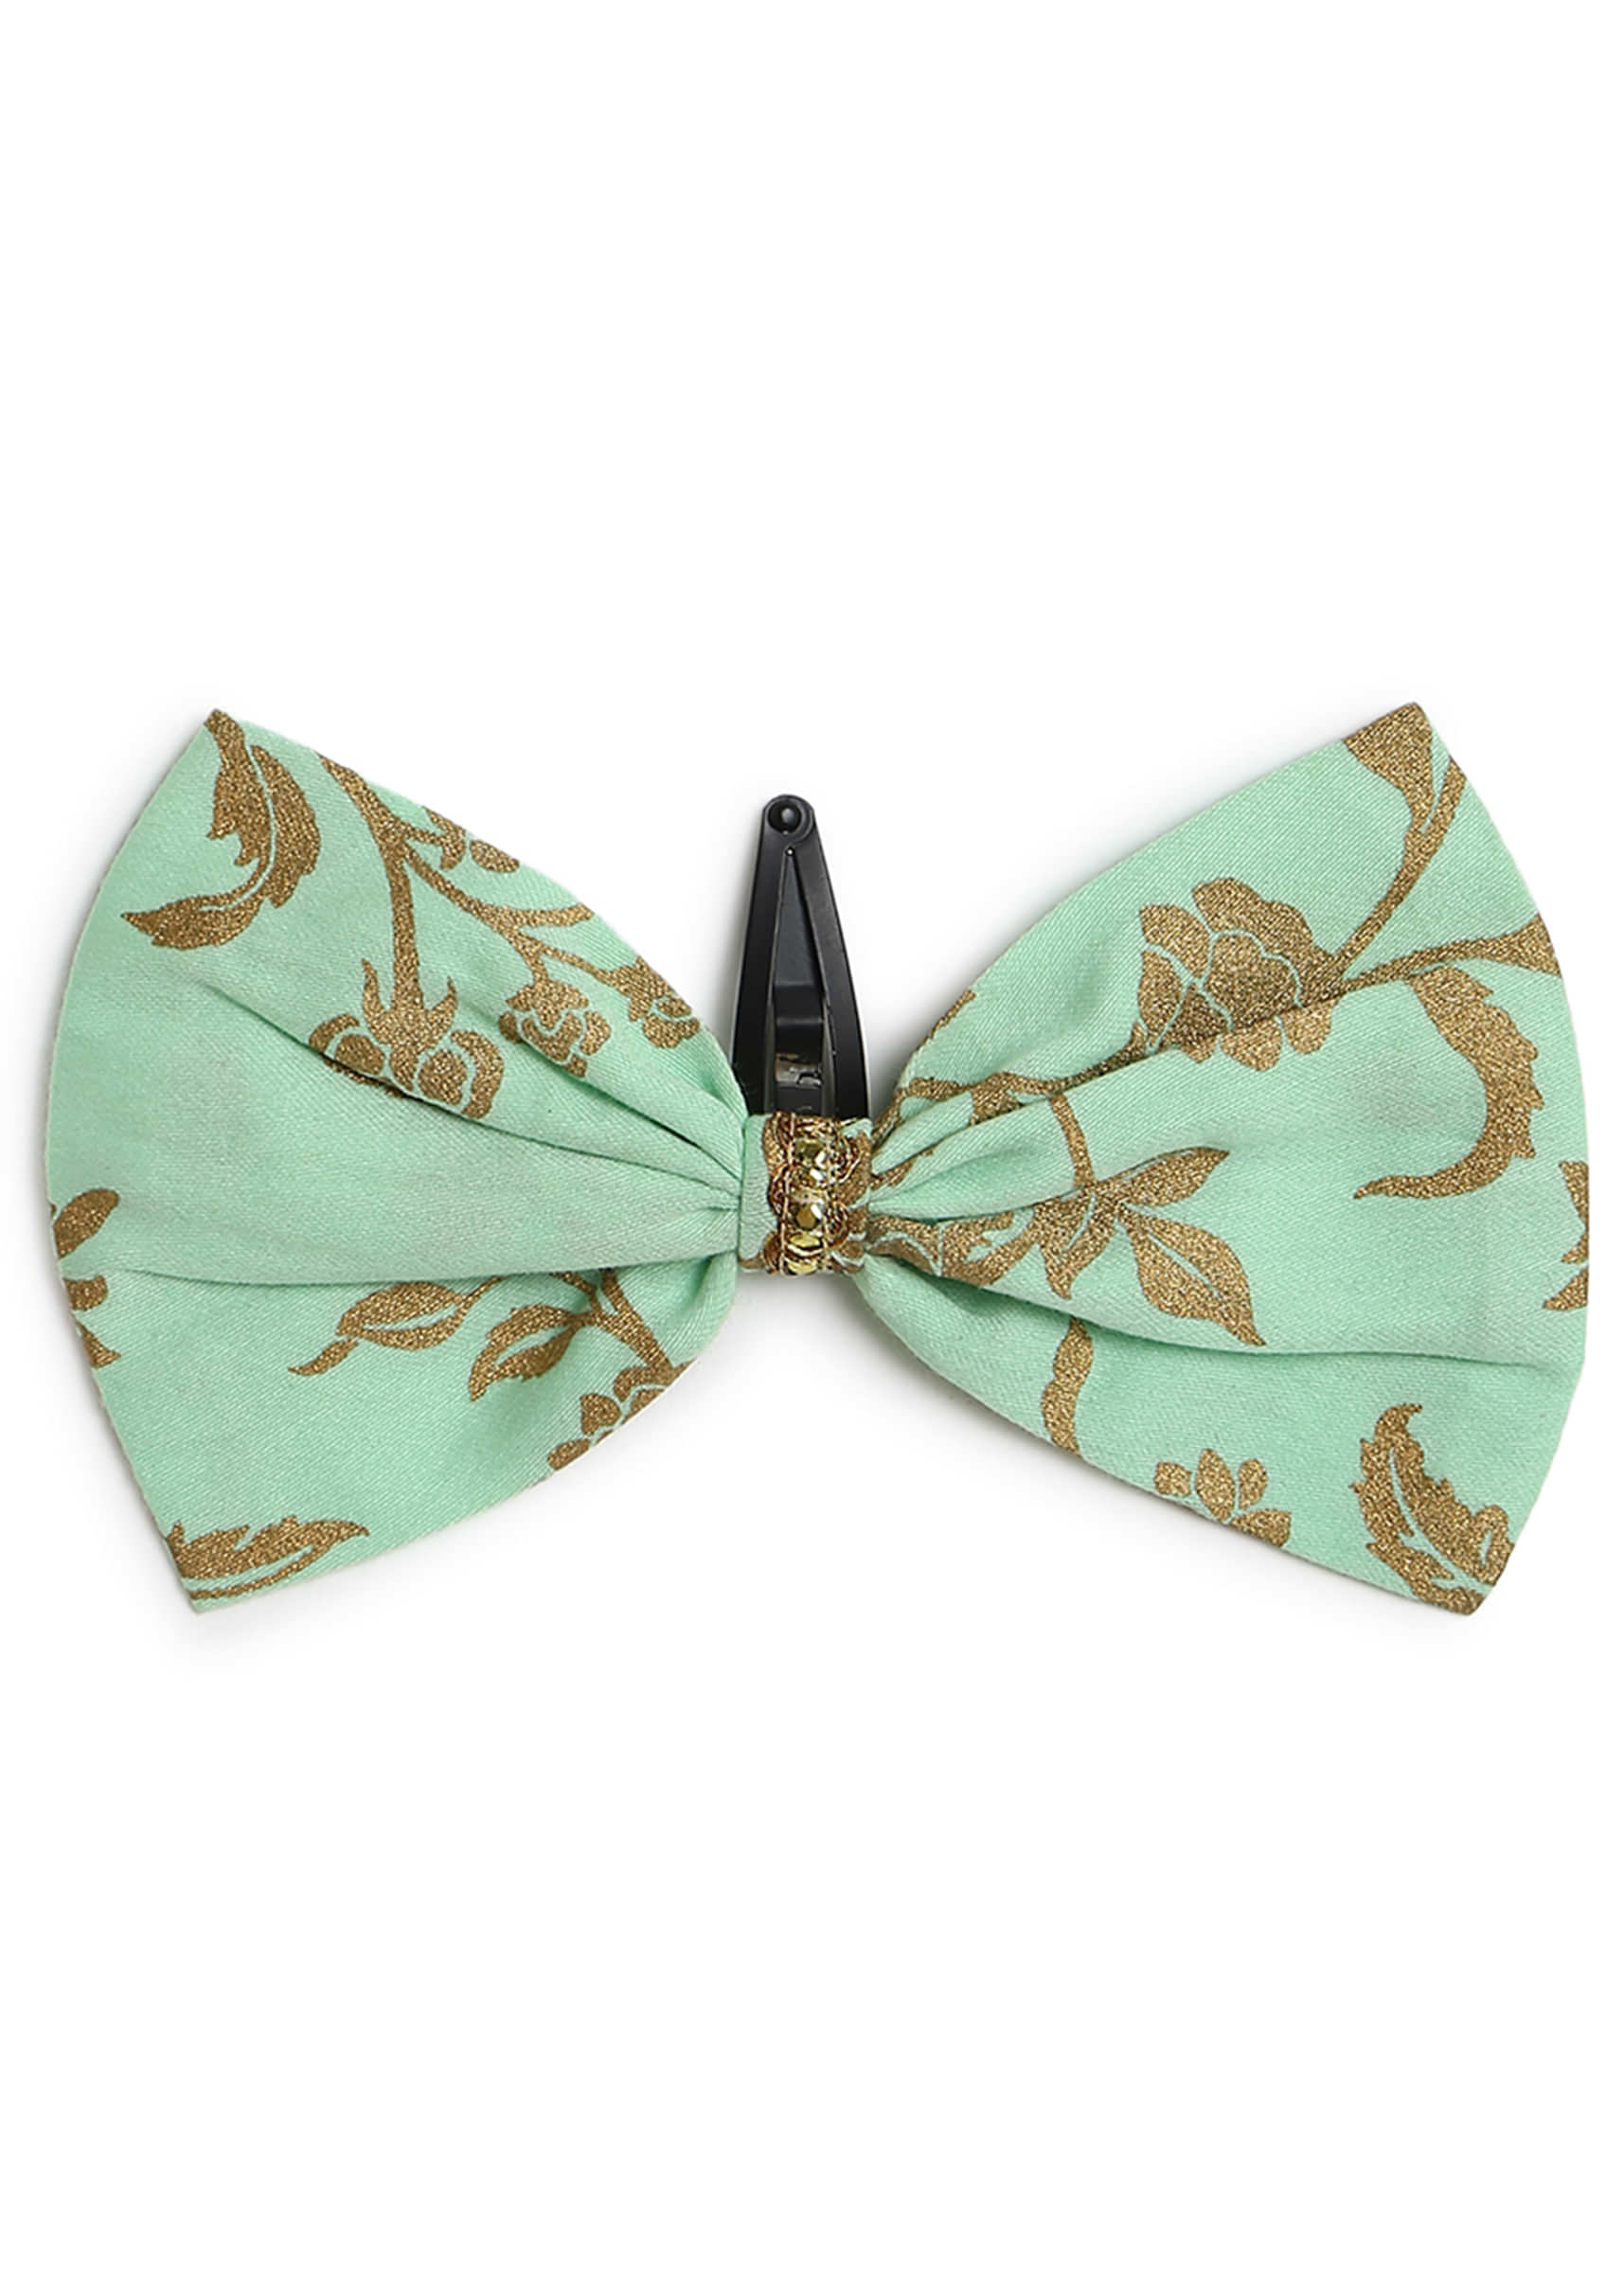 Kalki Girls Combo Of Sea Green Embroidered Cord Set And Gold Printed Bow Hairclip